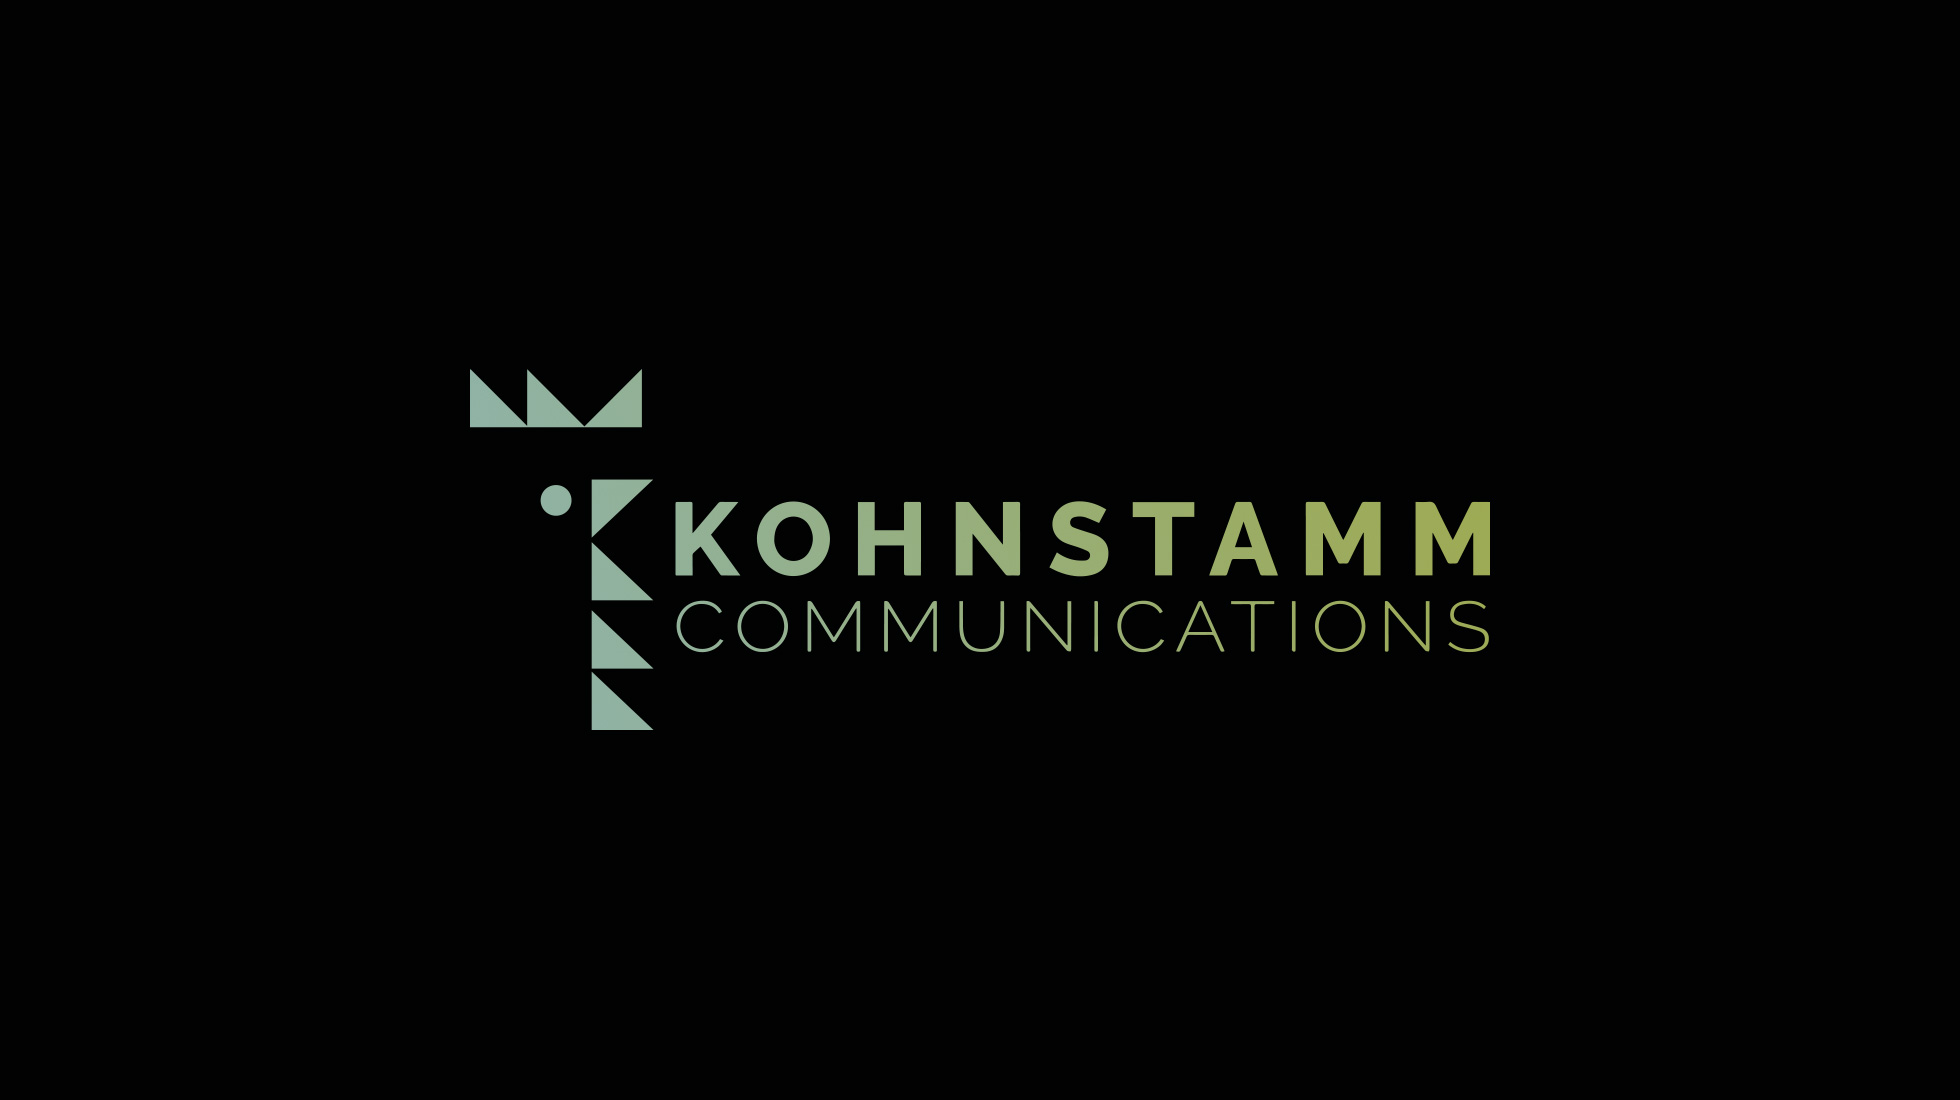 broadhead acquires public relations firm Kohnstamm Communications